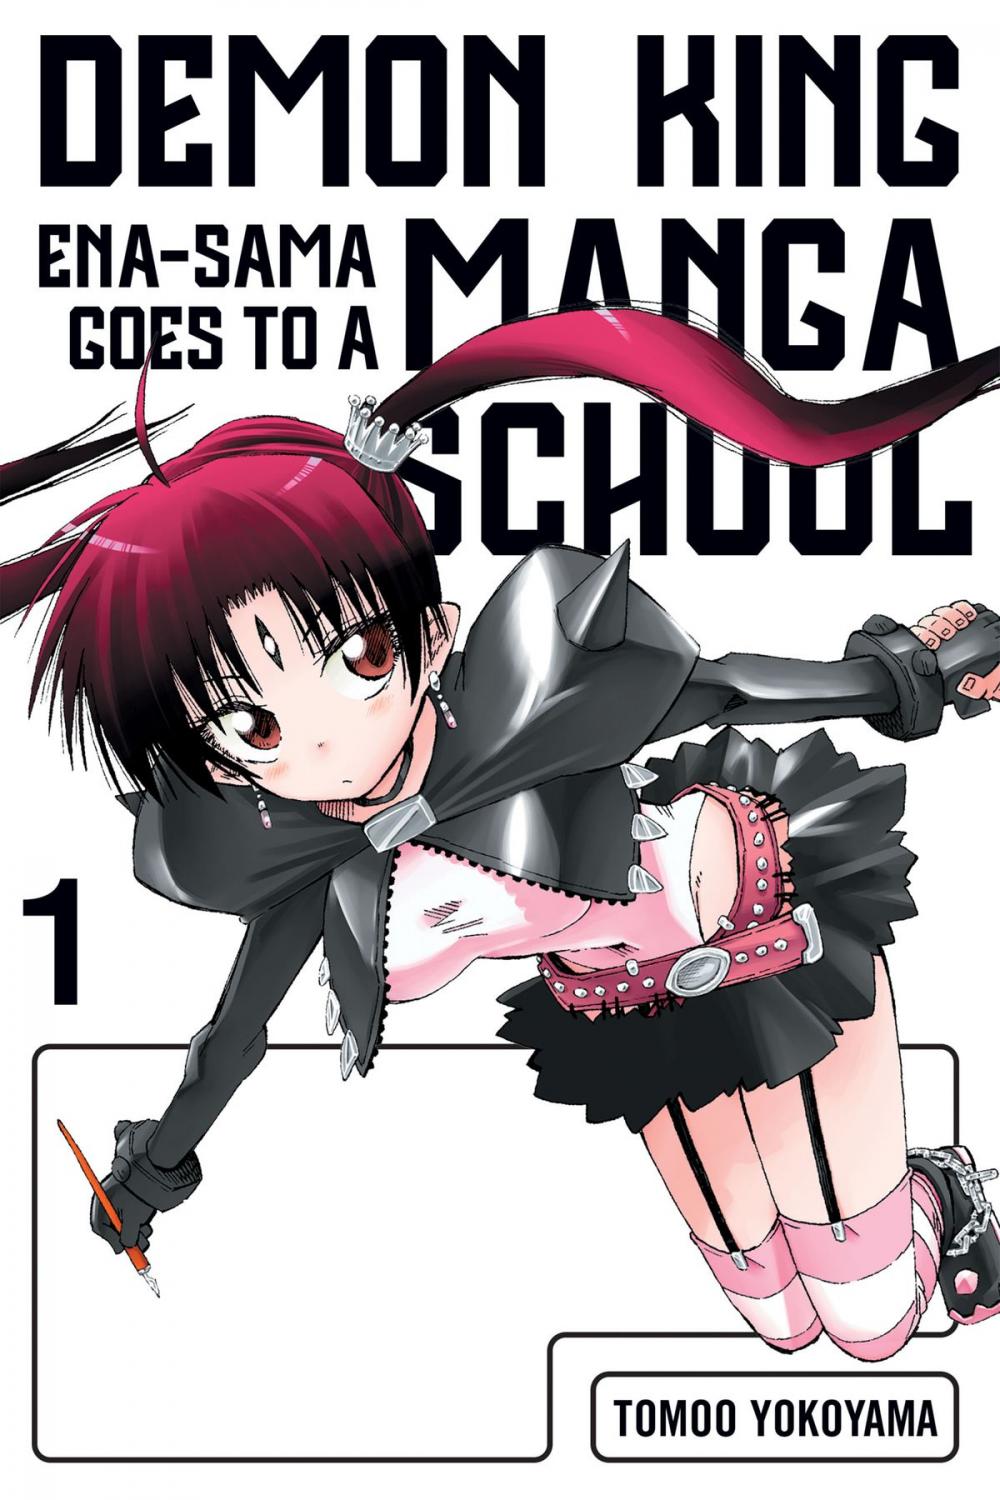 Big bigCover of Demon King Ena-sama Goes to a Manga School, Vol. 1